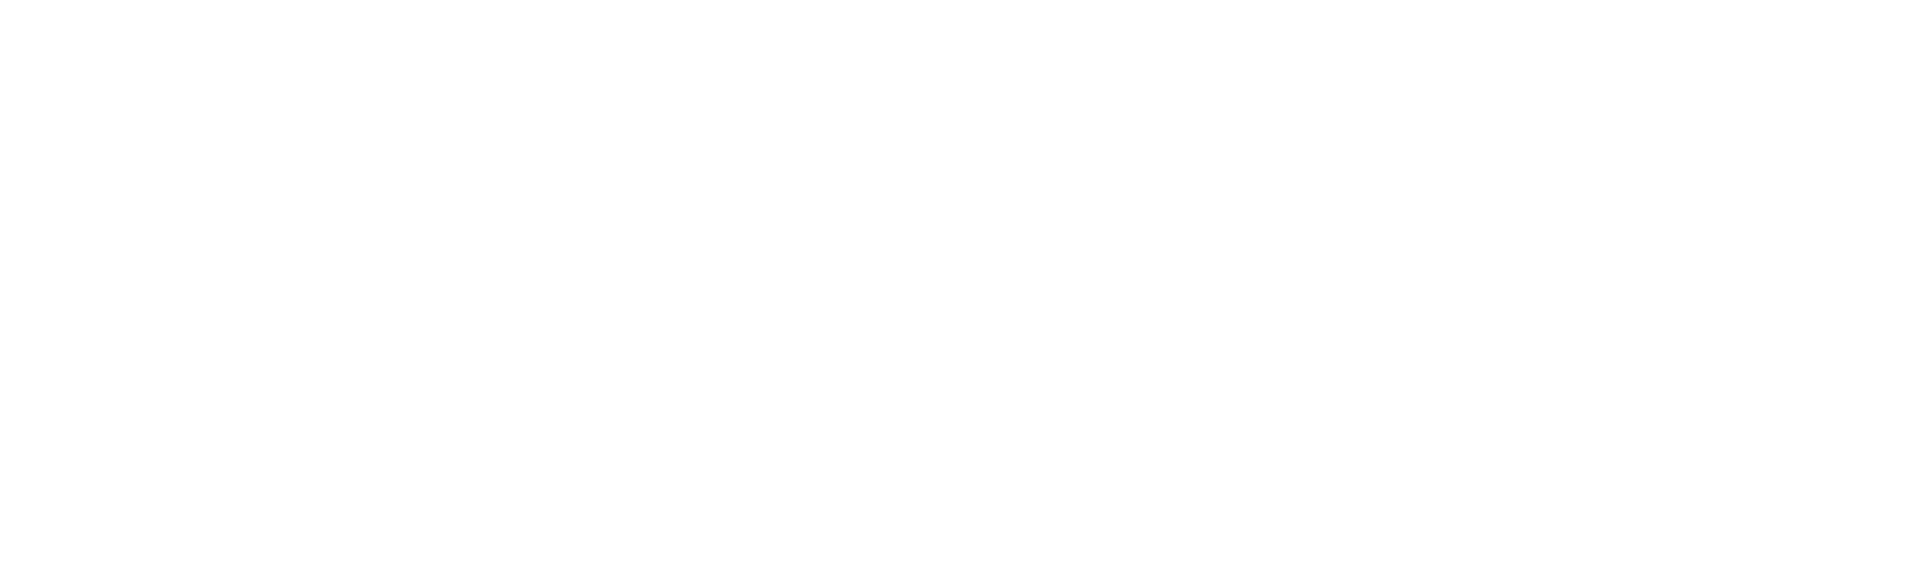 F5-White-Logo-Resized